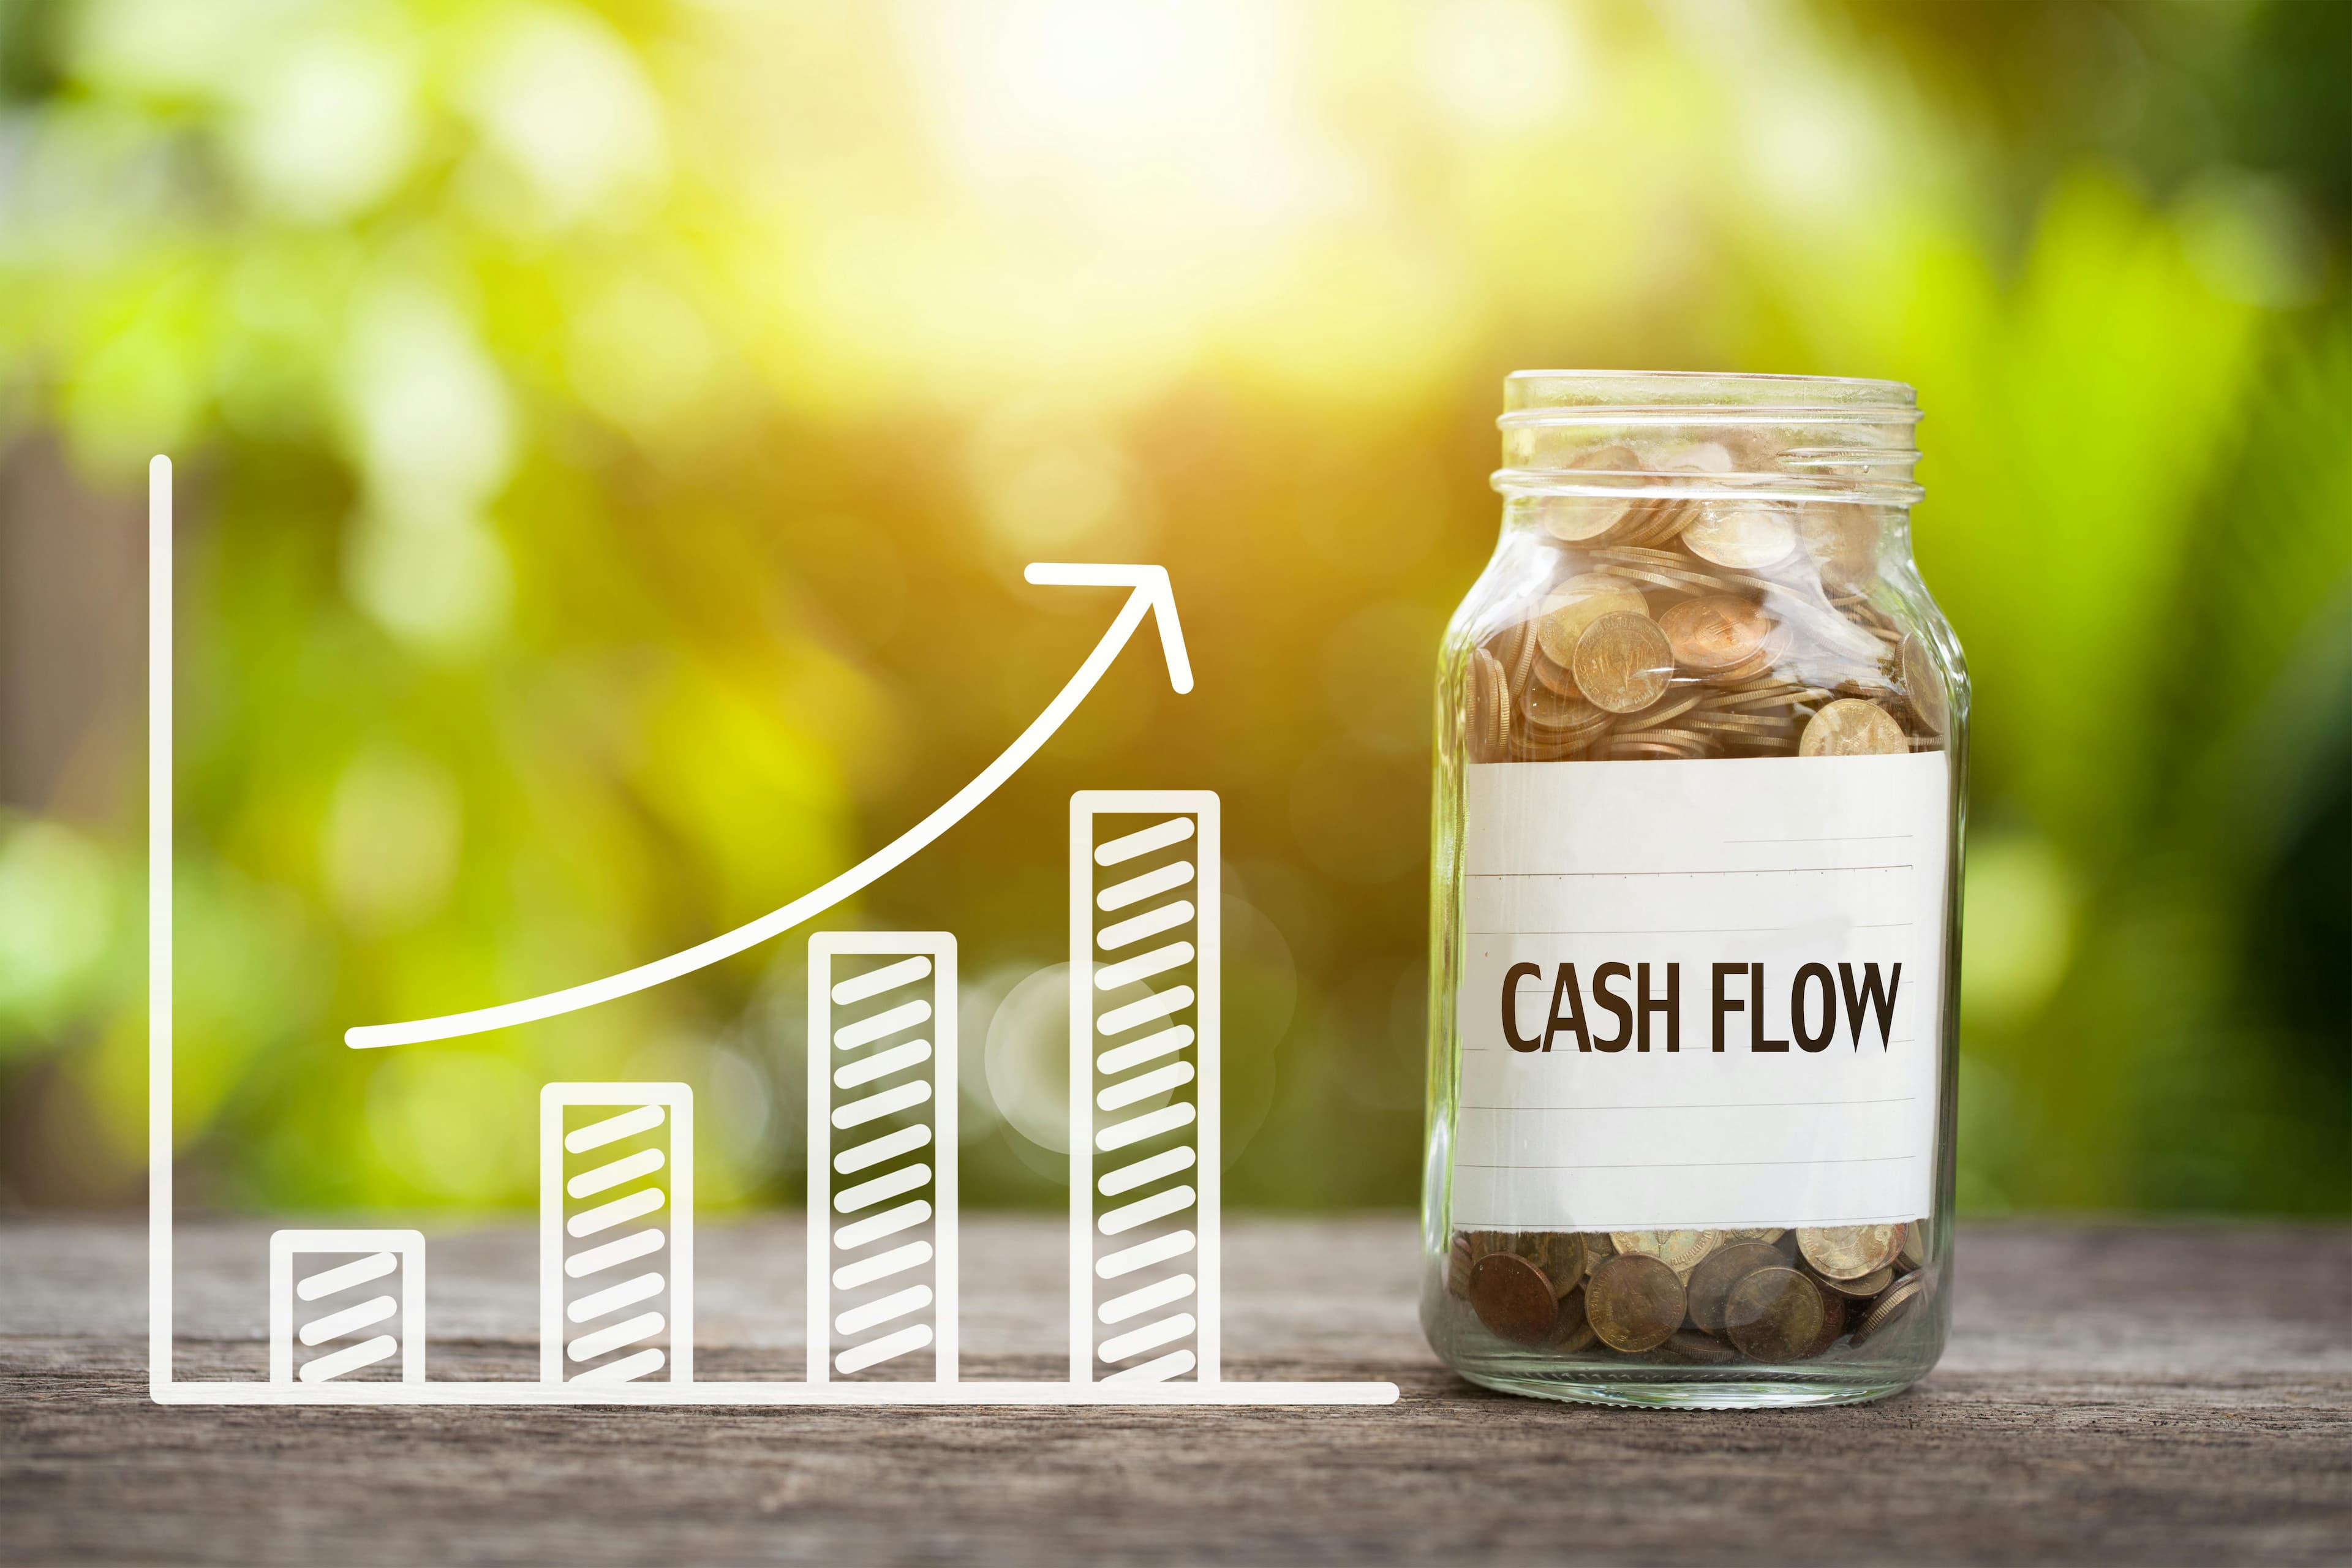 Tip jar titled 'cash flow' and a bar graph indicating a positive cash flow